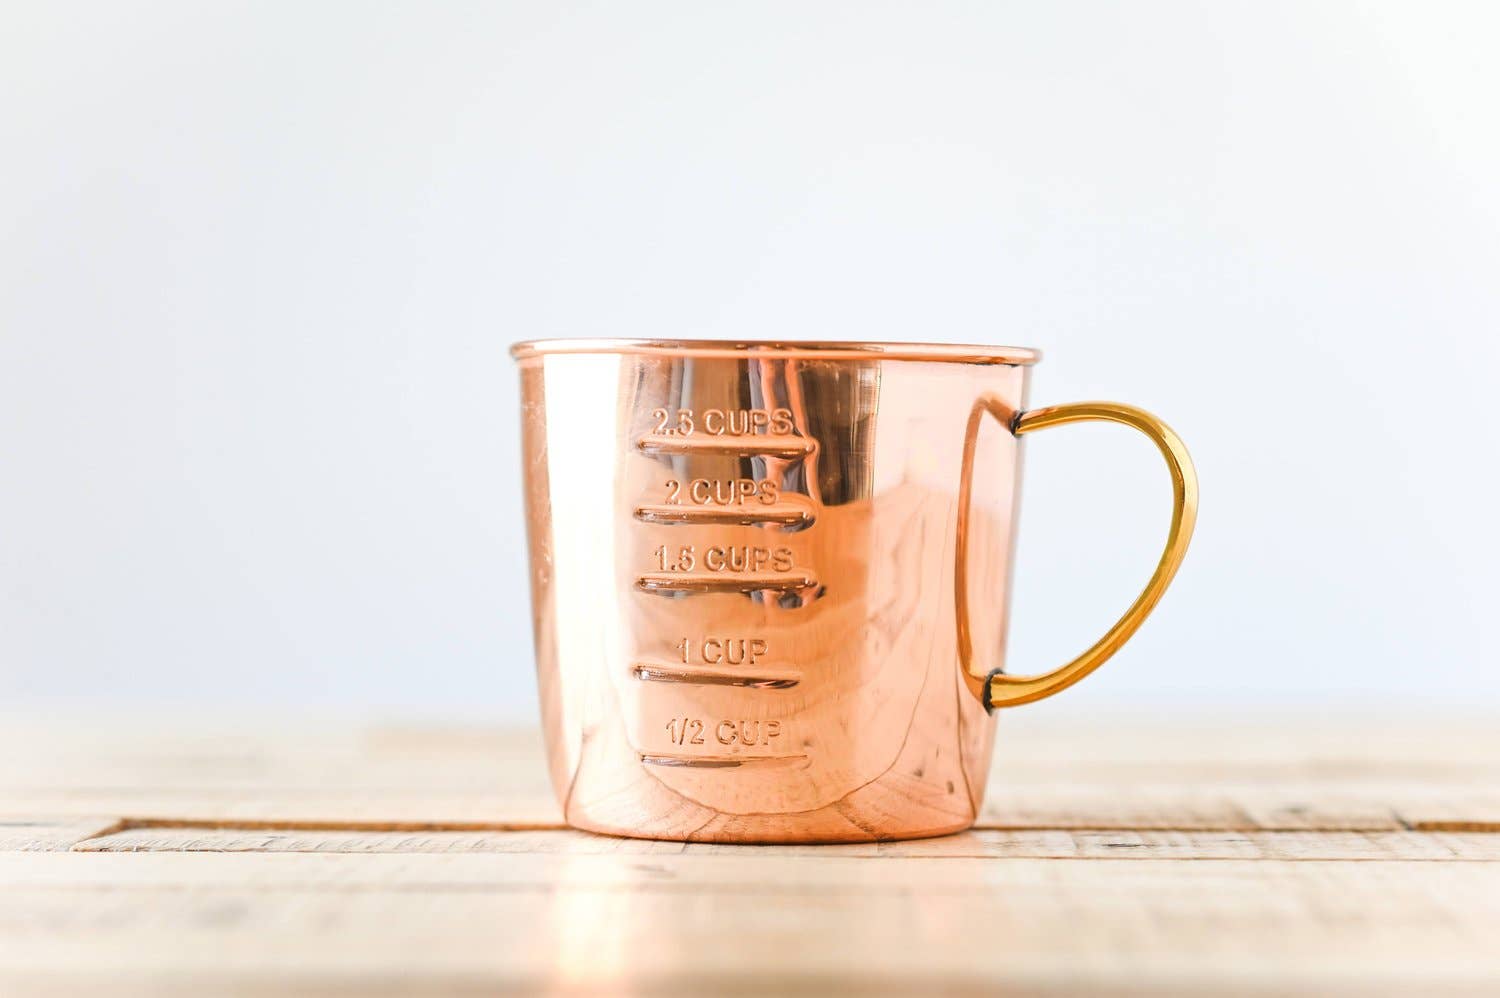 Season and Stir™ Copper Liquid Measuring Cup - 2.5 Cup